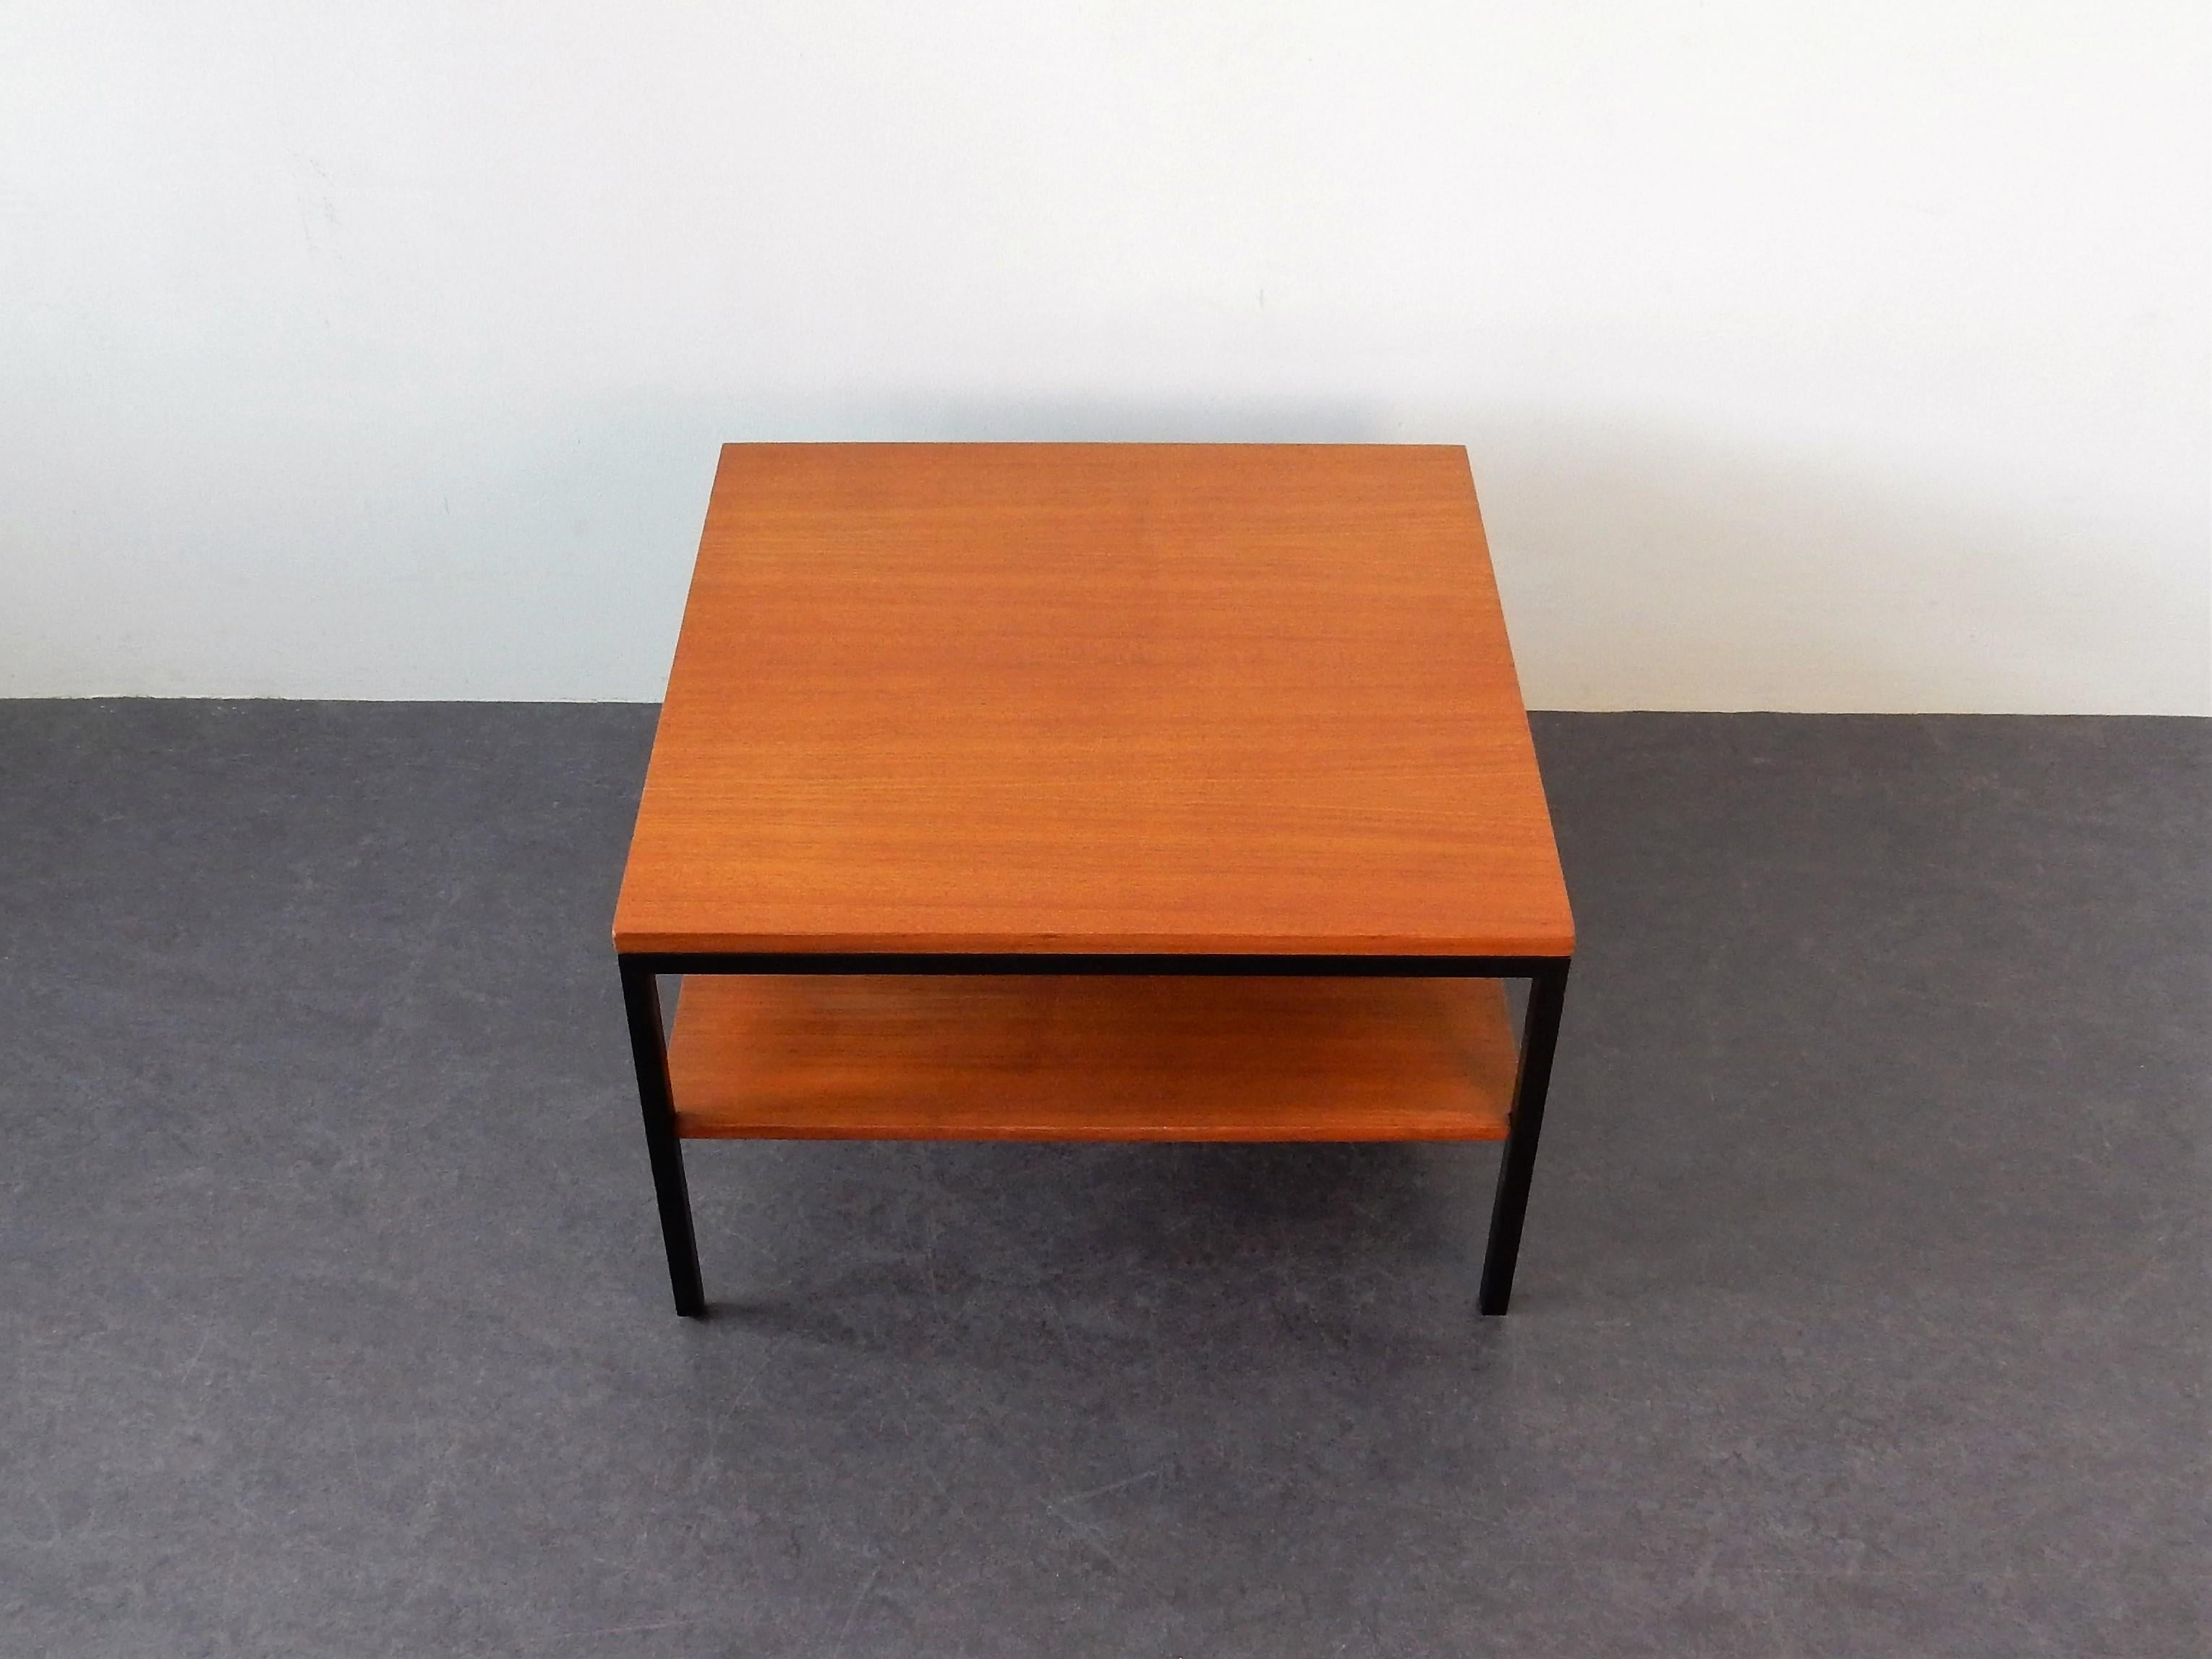 Veneer Vintage Wood and Metal Coffee Table with Extra Low Shelf